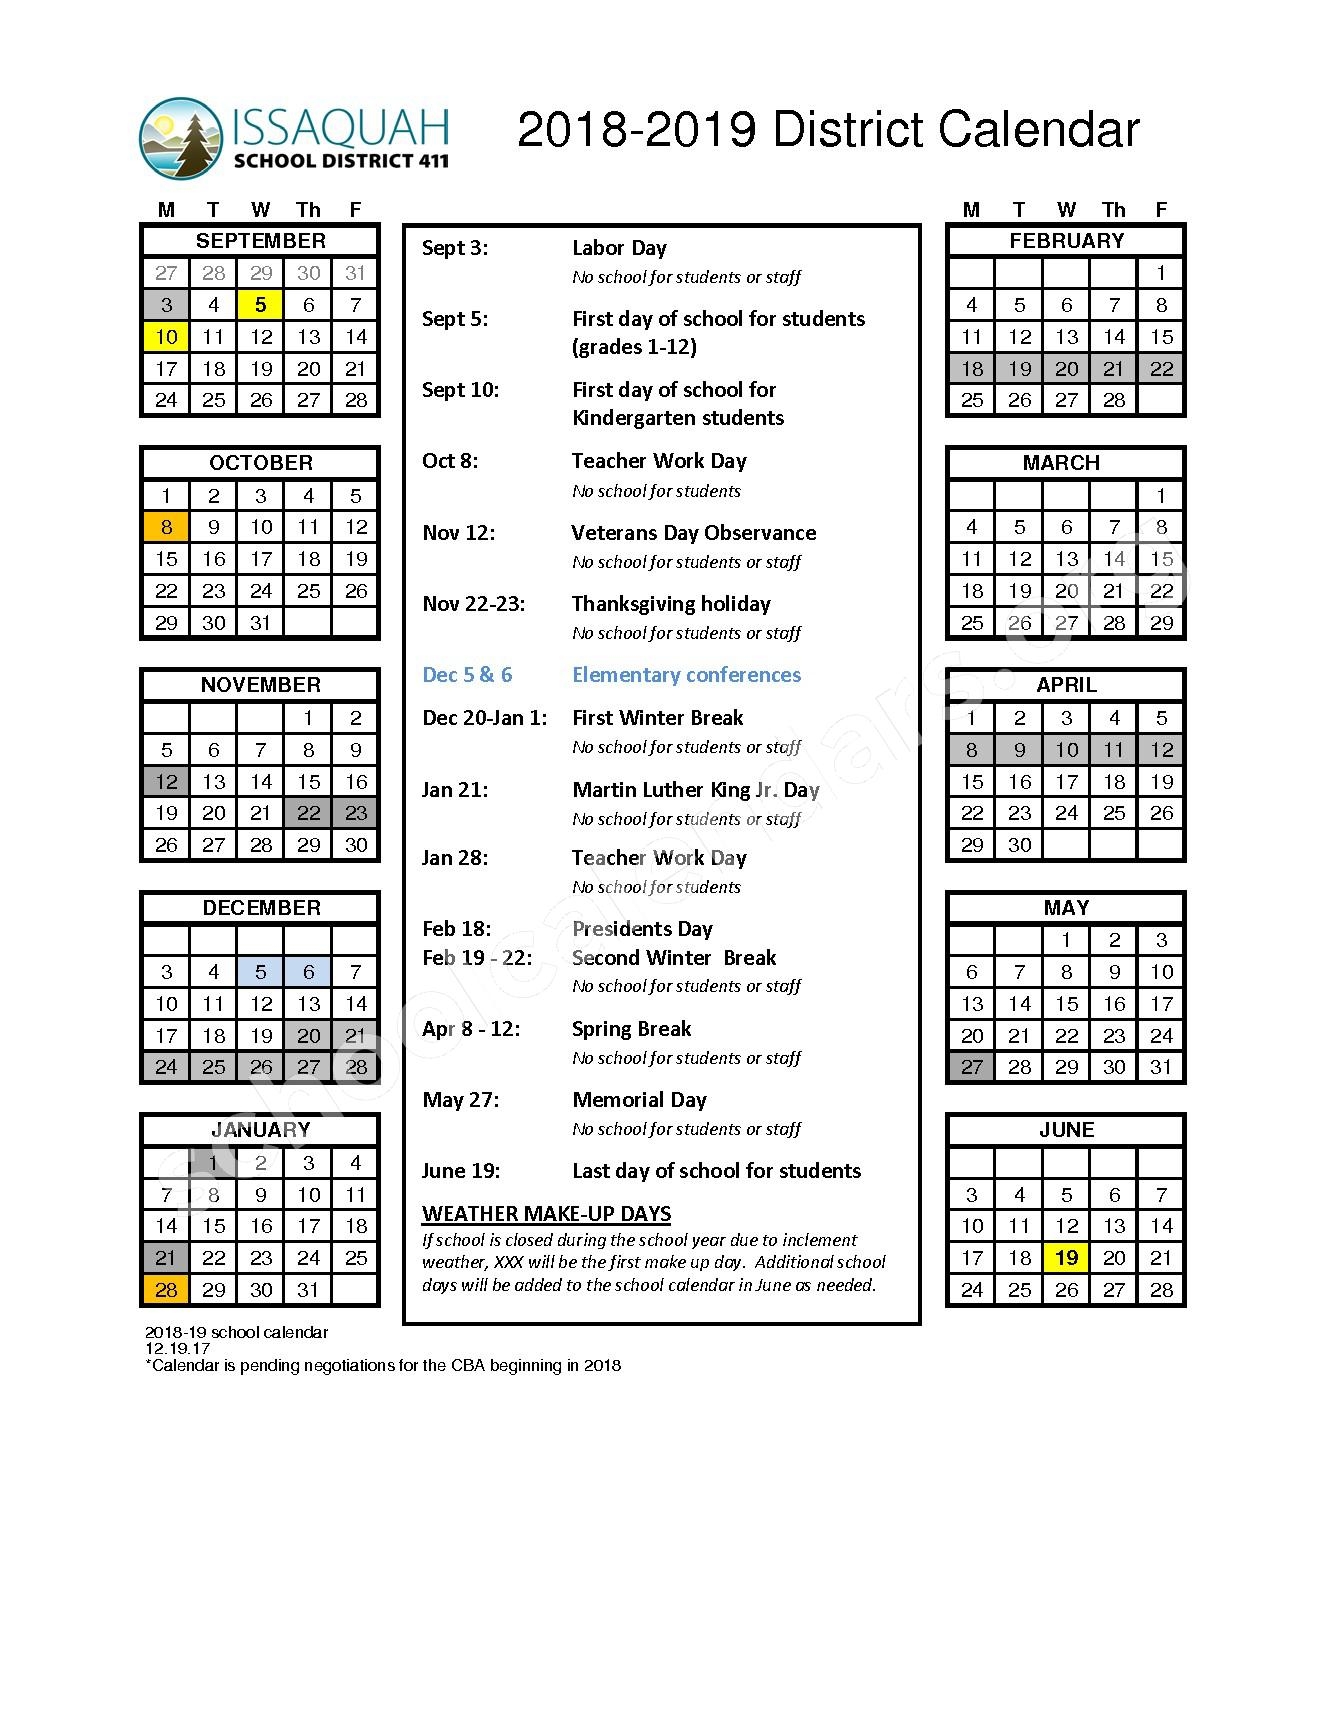 Maywood Middle School Calendars Renton Wa